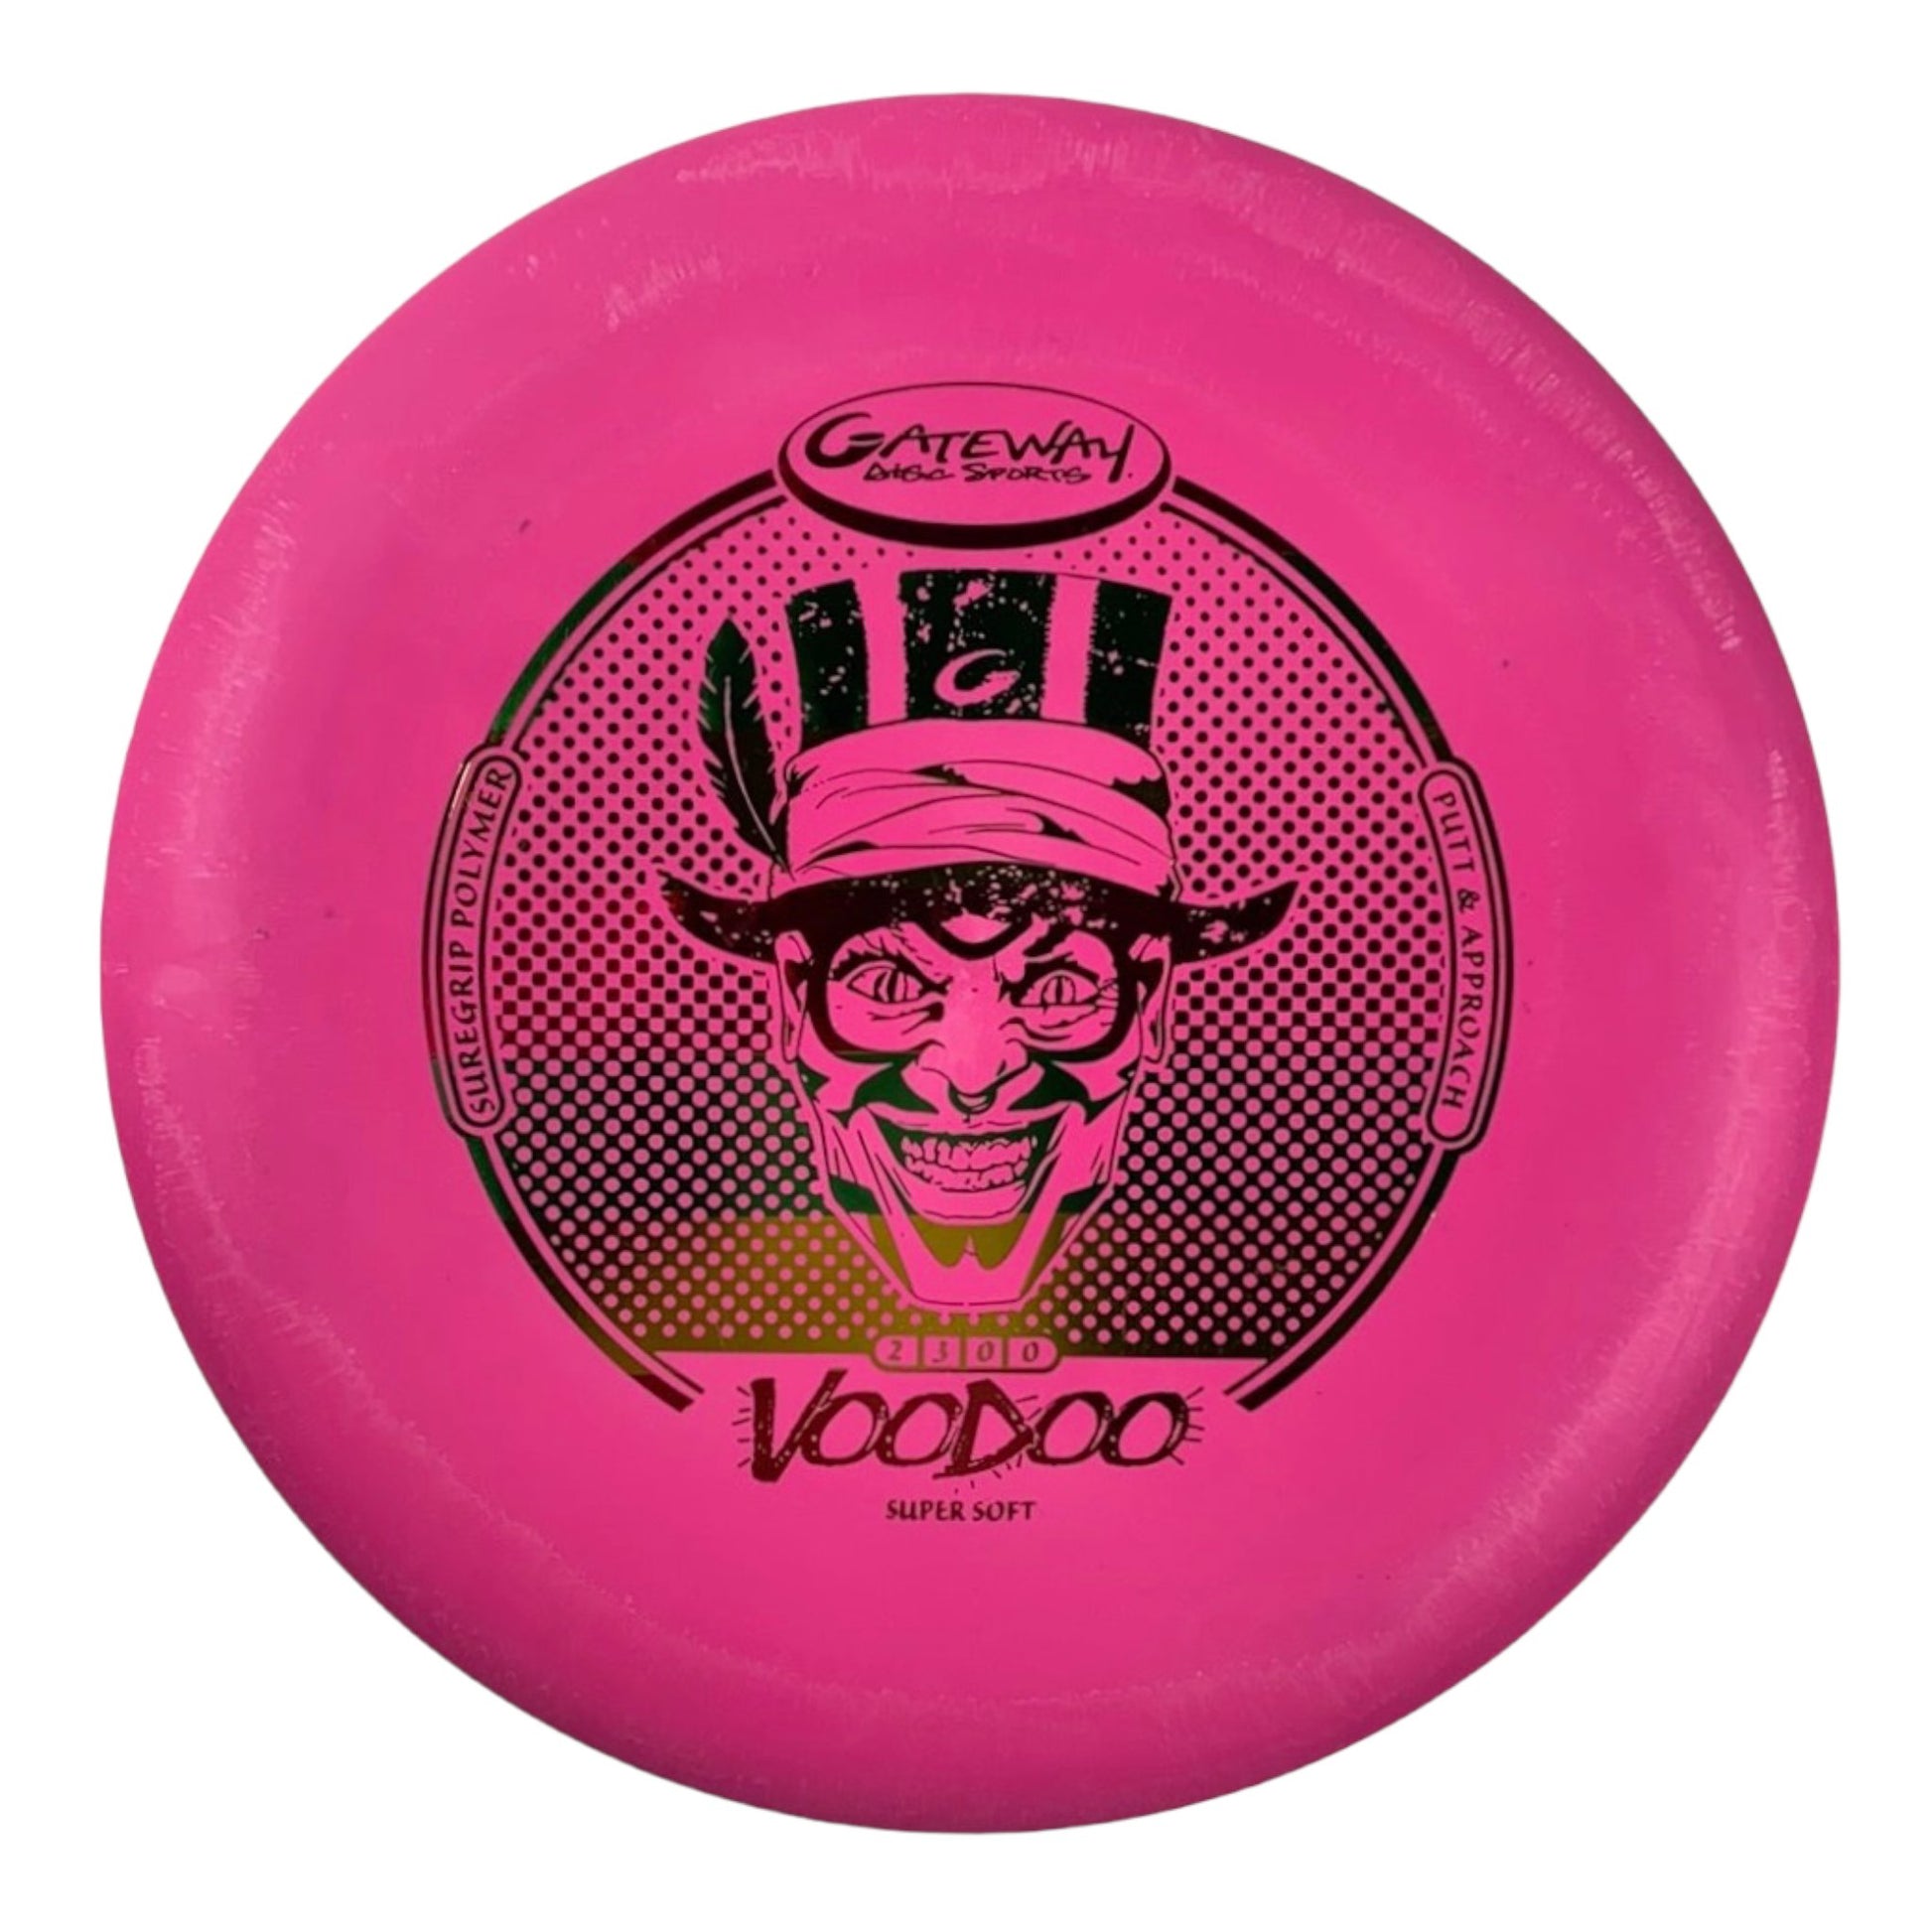 Gateway Disc Sports Voodoo | Super Soft (SS) | Pink/Rasta 175g Disc Golf